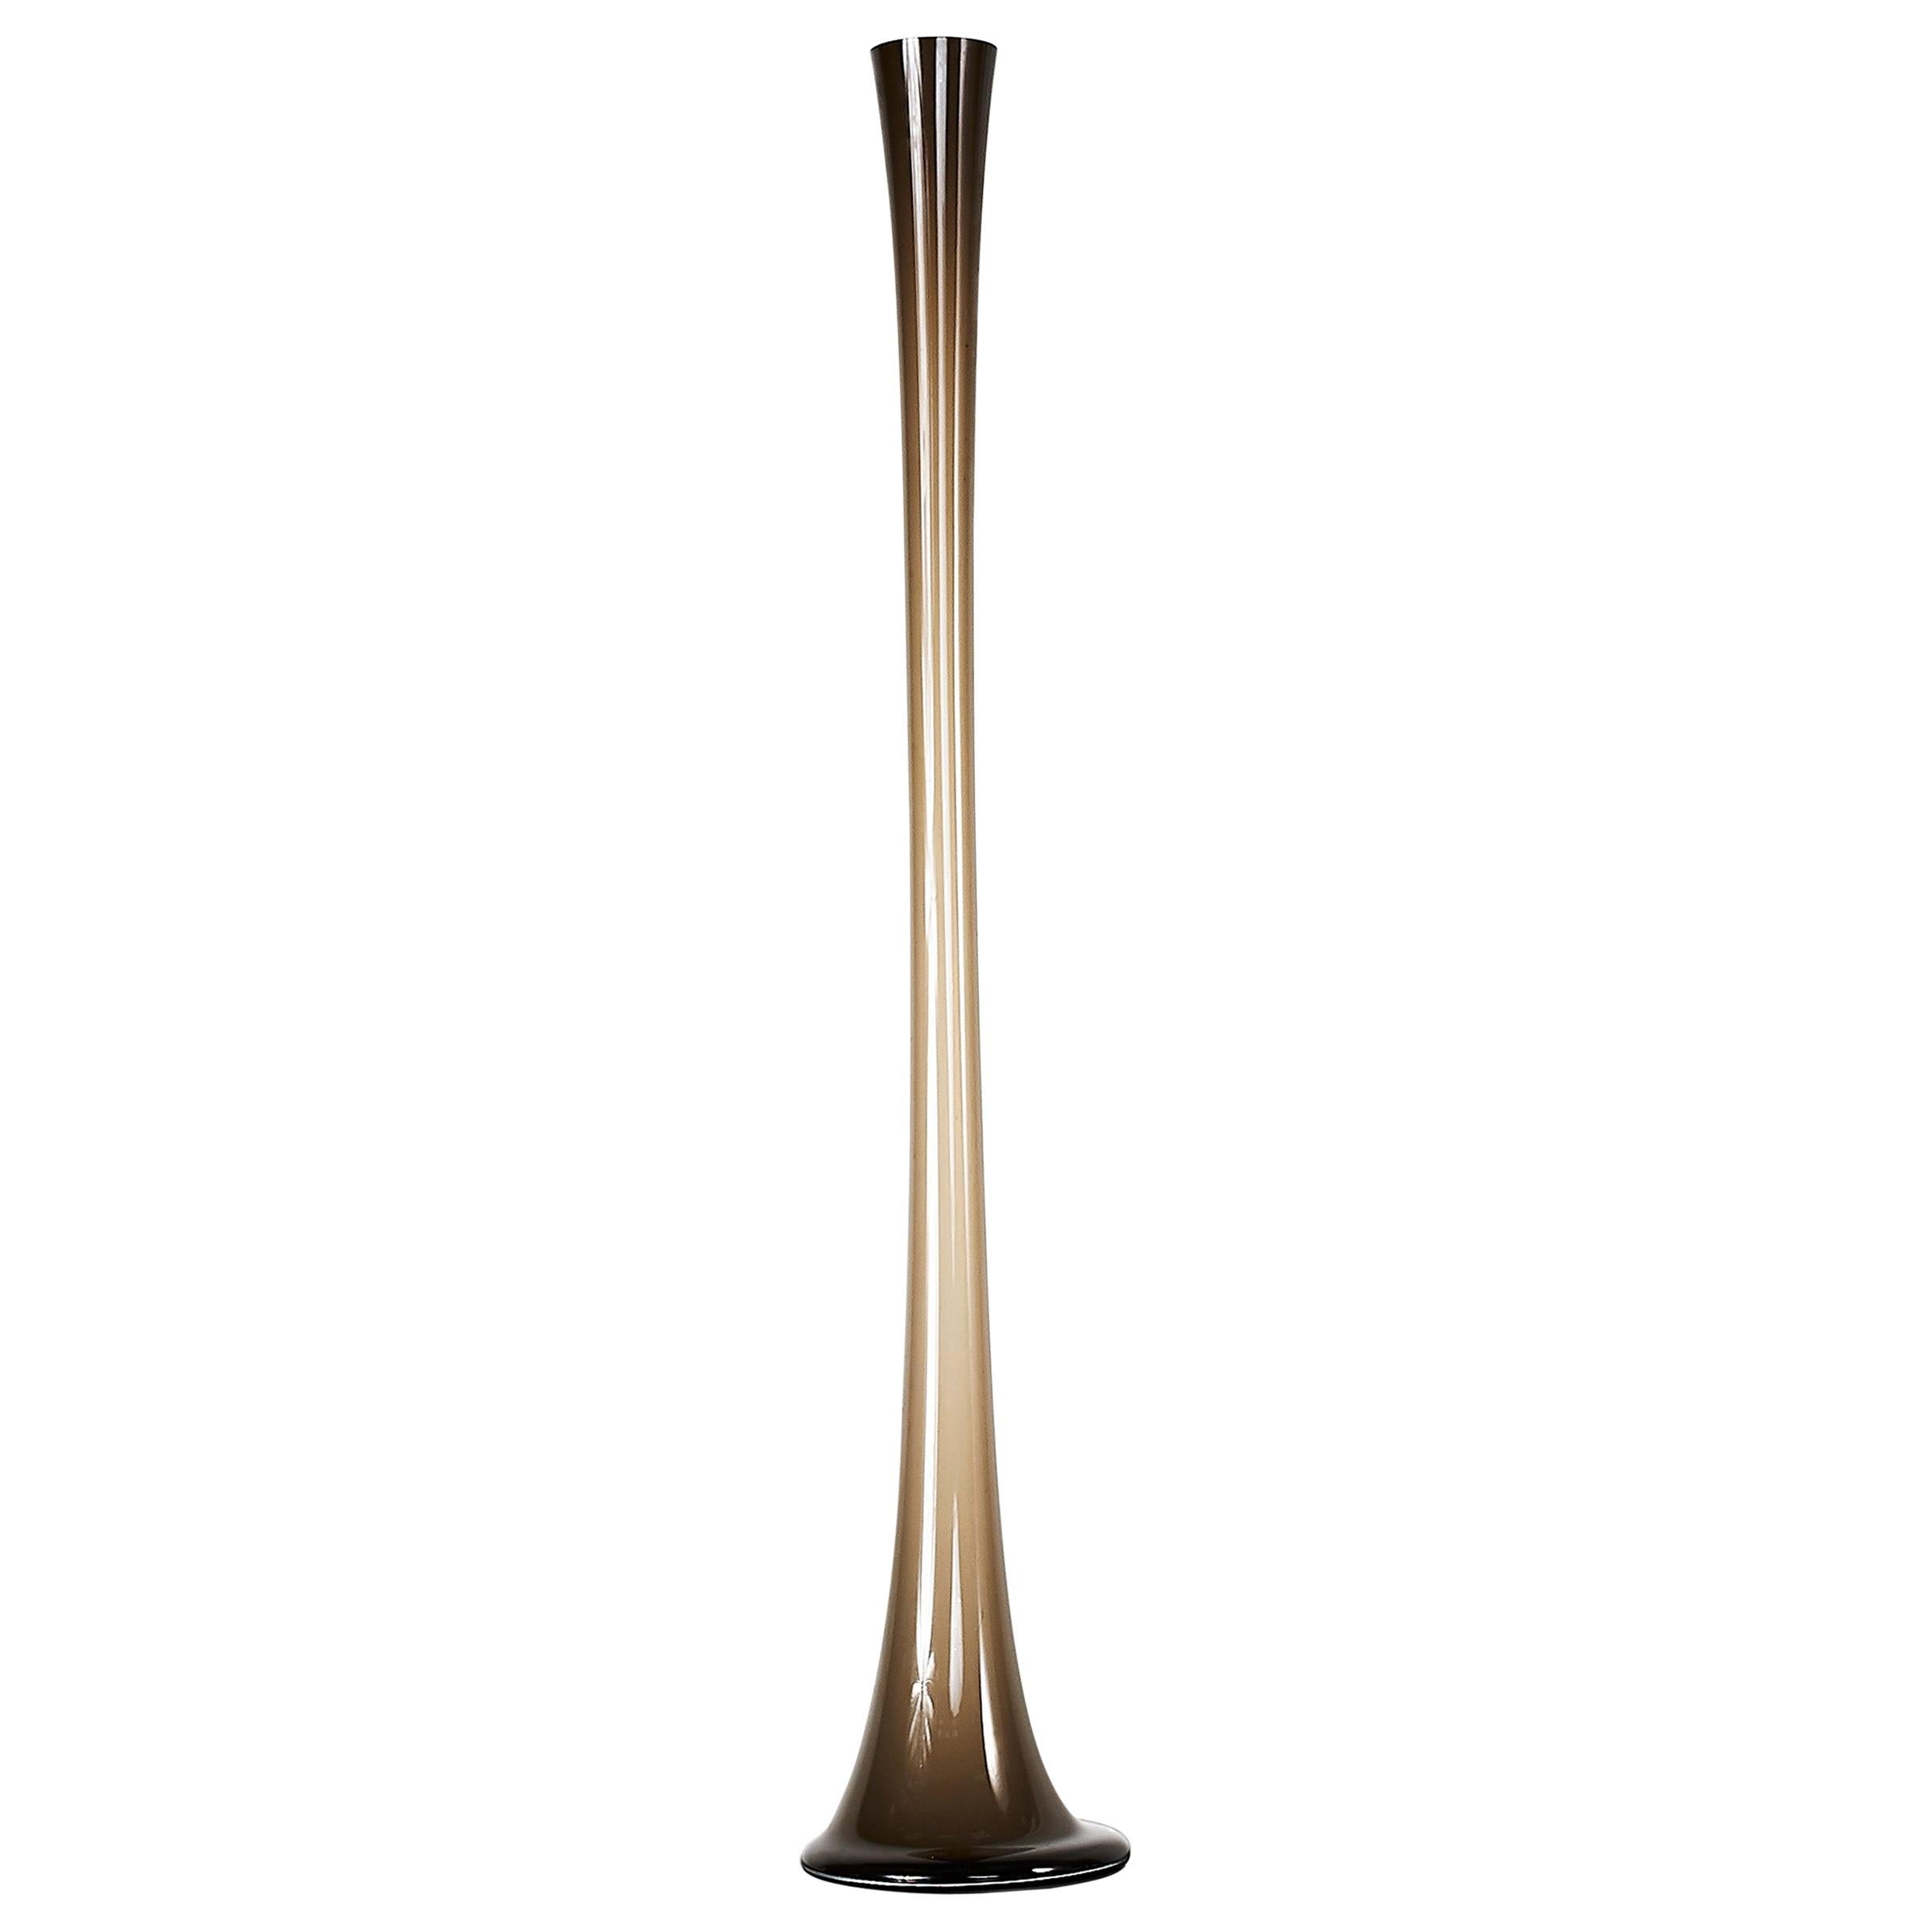 Exquisite Murano Glass Mid-Century Modern Tulip Floor Vase Monumentally Tall For Sale